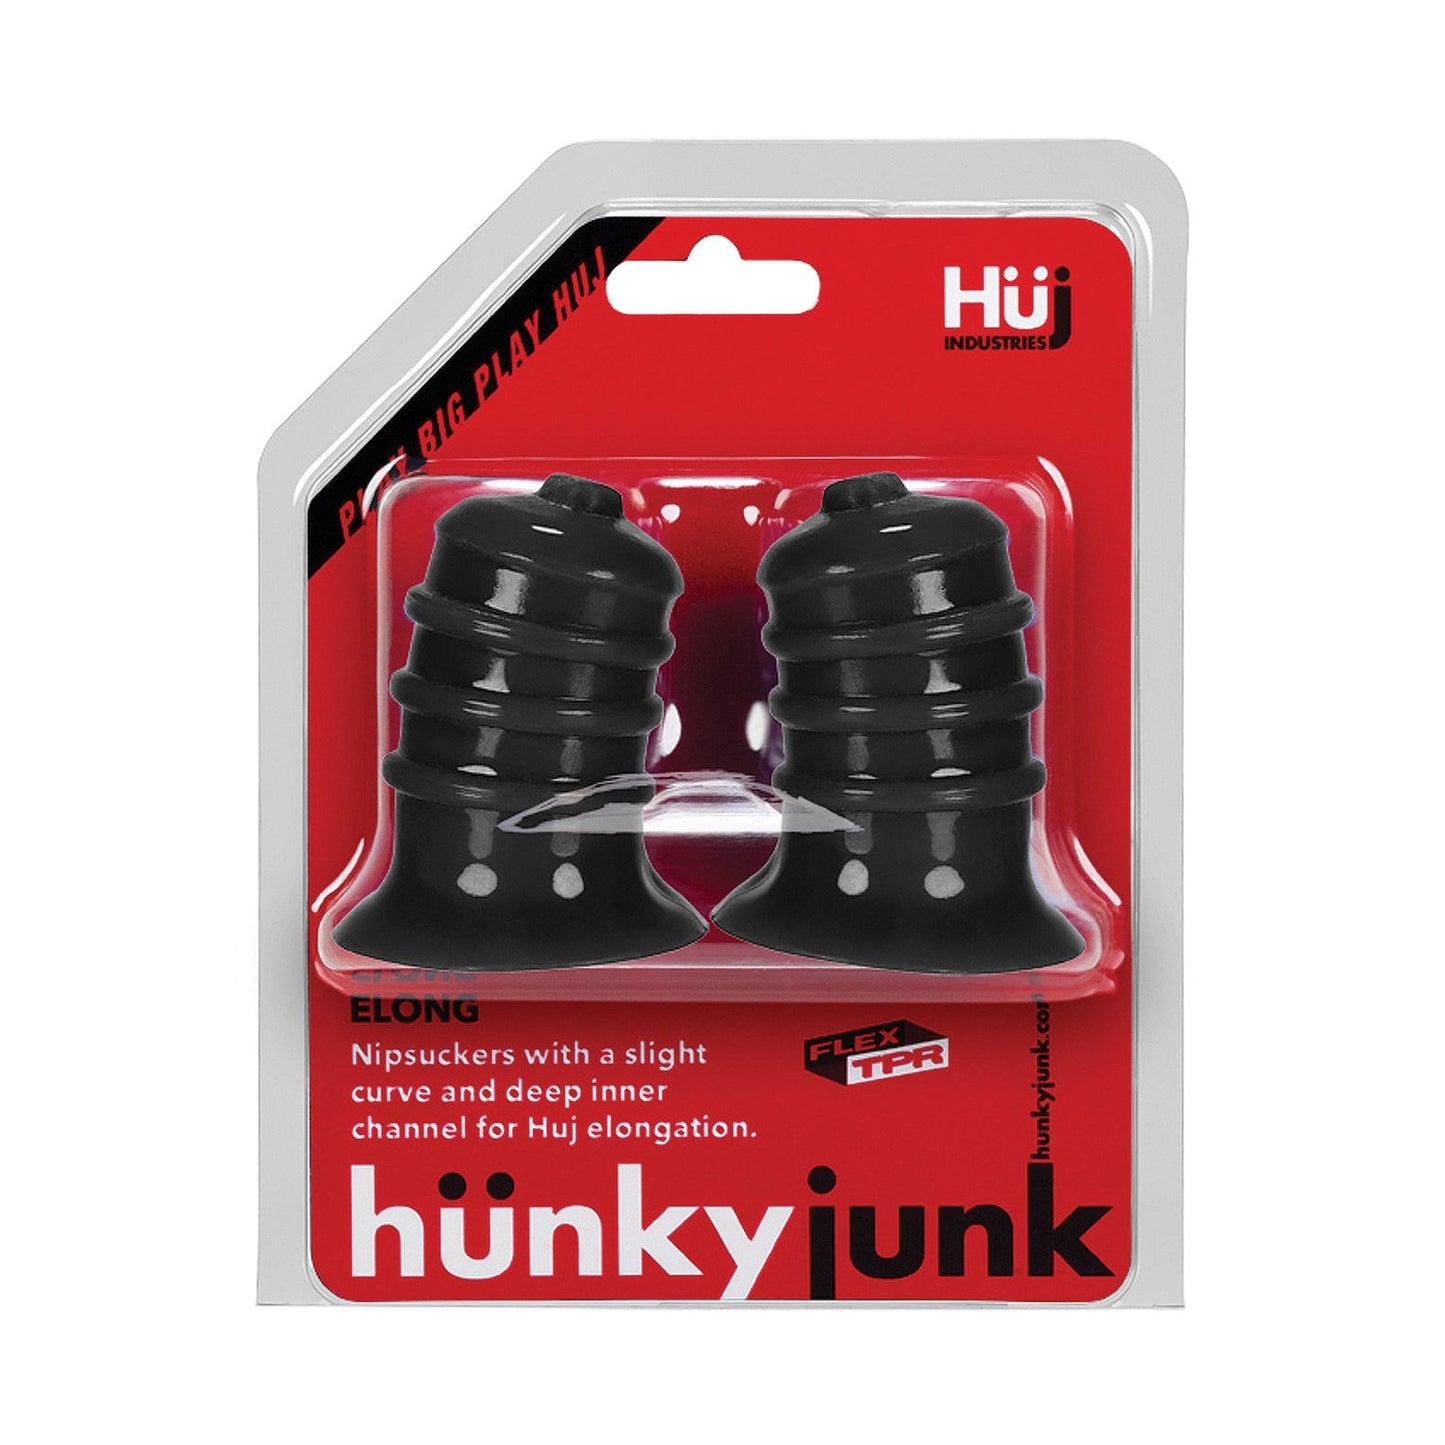 Hunky Junk Elong Nipsuckers